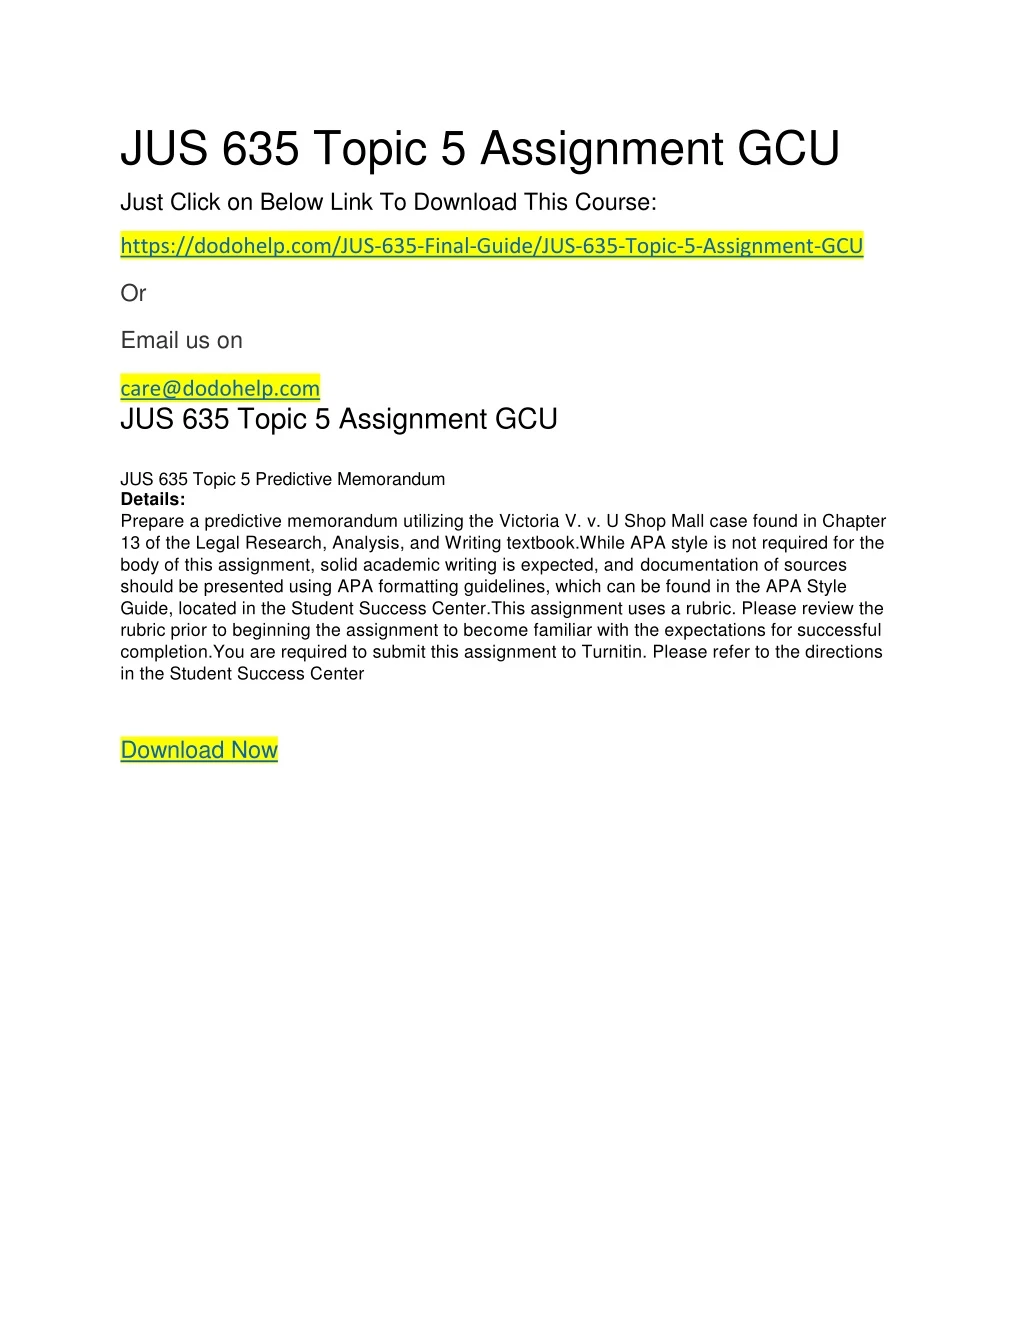 jus 635 topic 5 assignment gcu